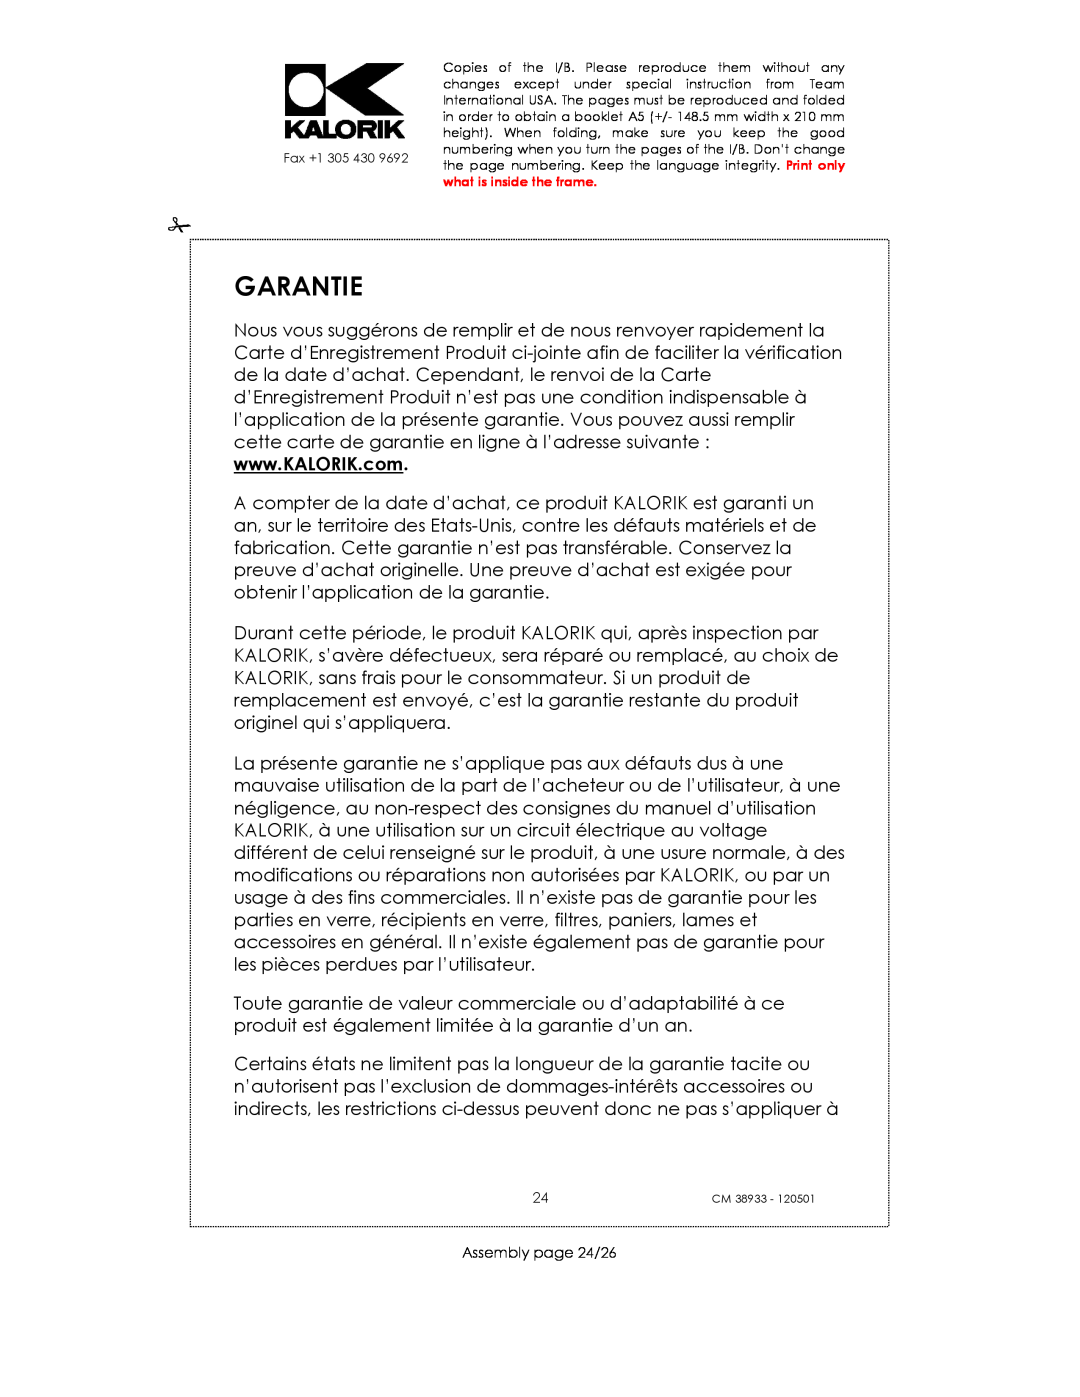 Kalorik CM 38933 manual Garantie, Assembly page 24/26 